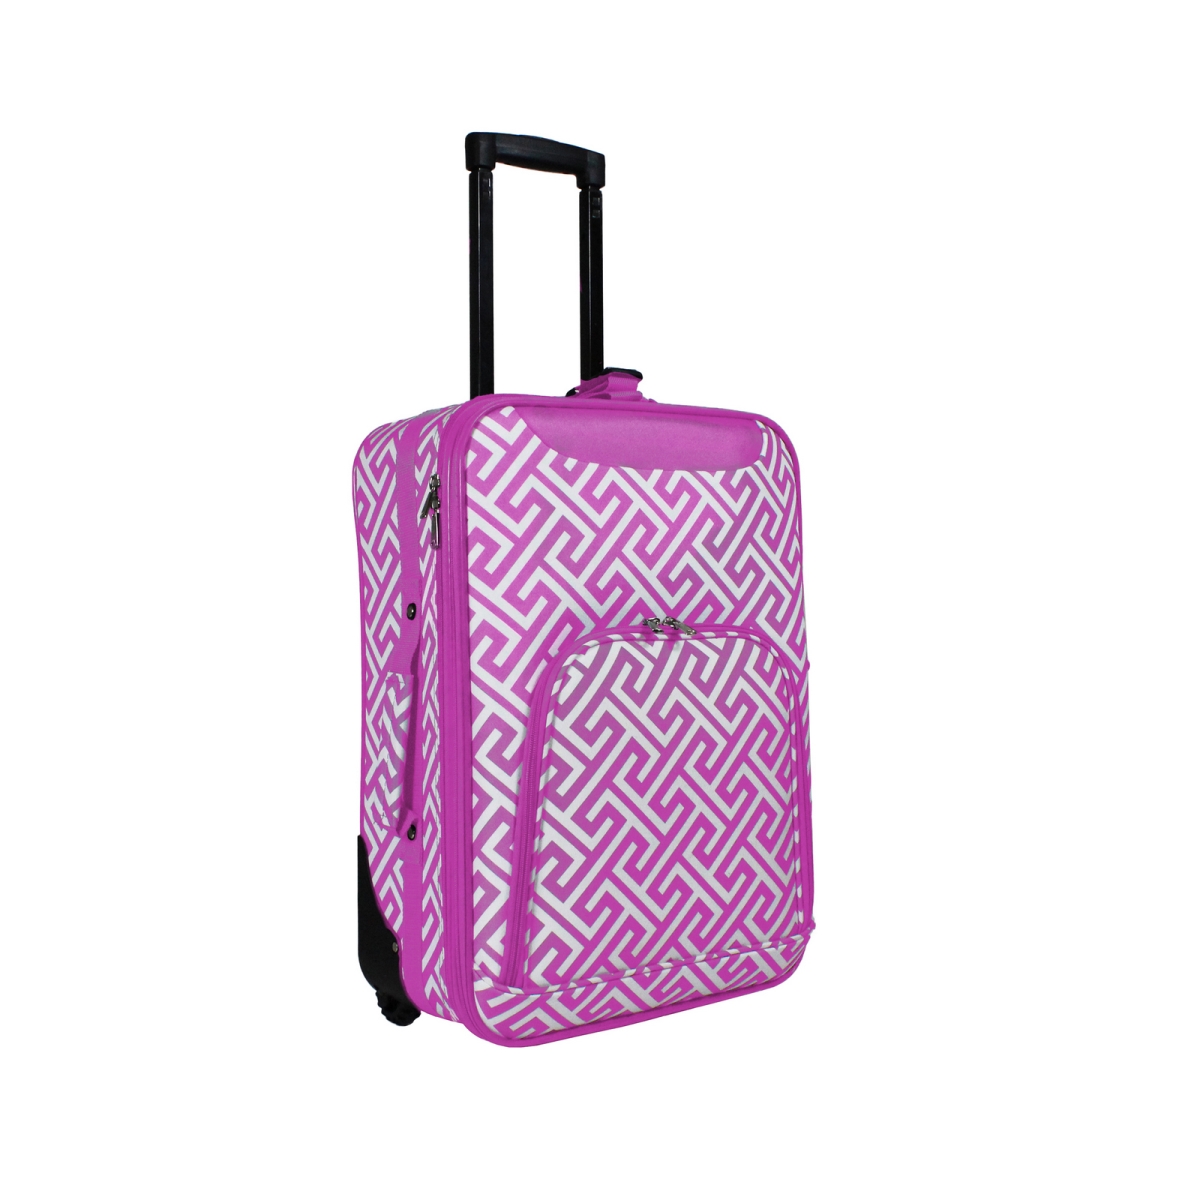 816701-185f-w 20 In. Lightweight Carry-on Suitcase - Fuchsia & White Greek Key